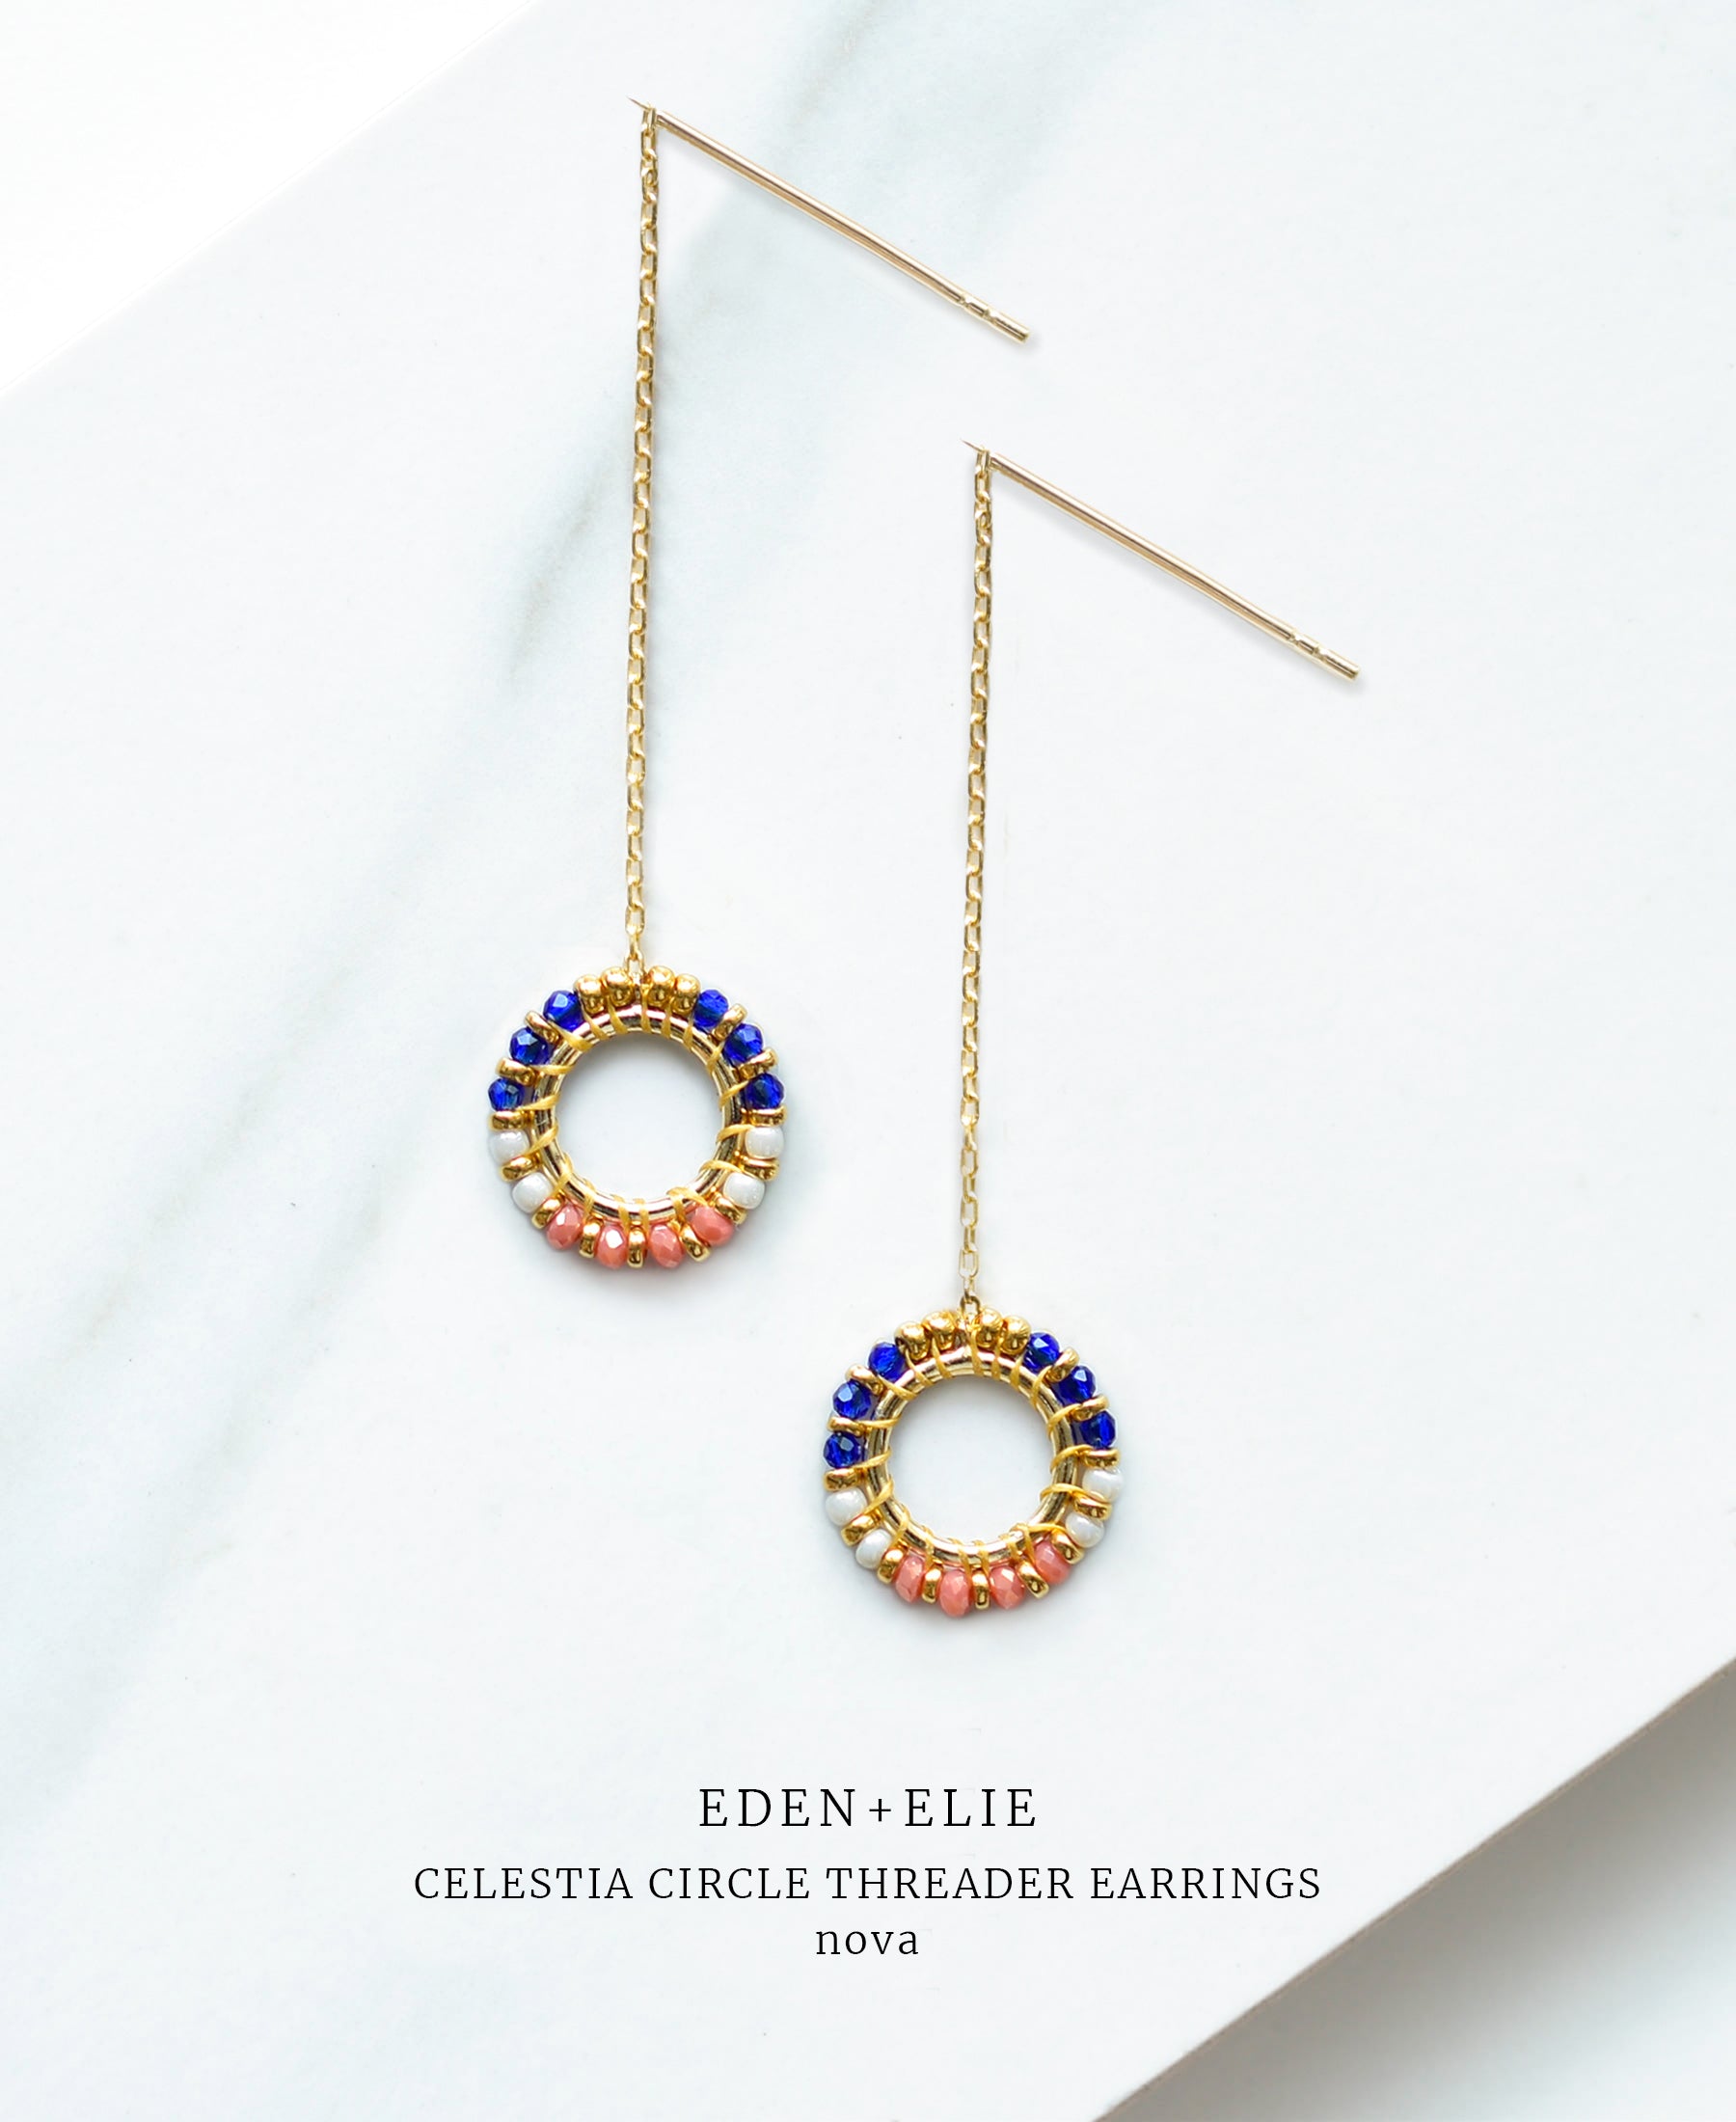 EDEN + ELIE Celestia Circle Threader Earrings - Nova